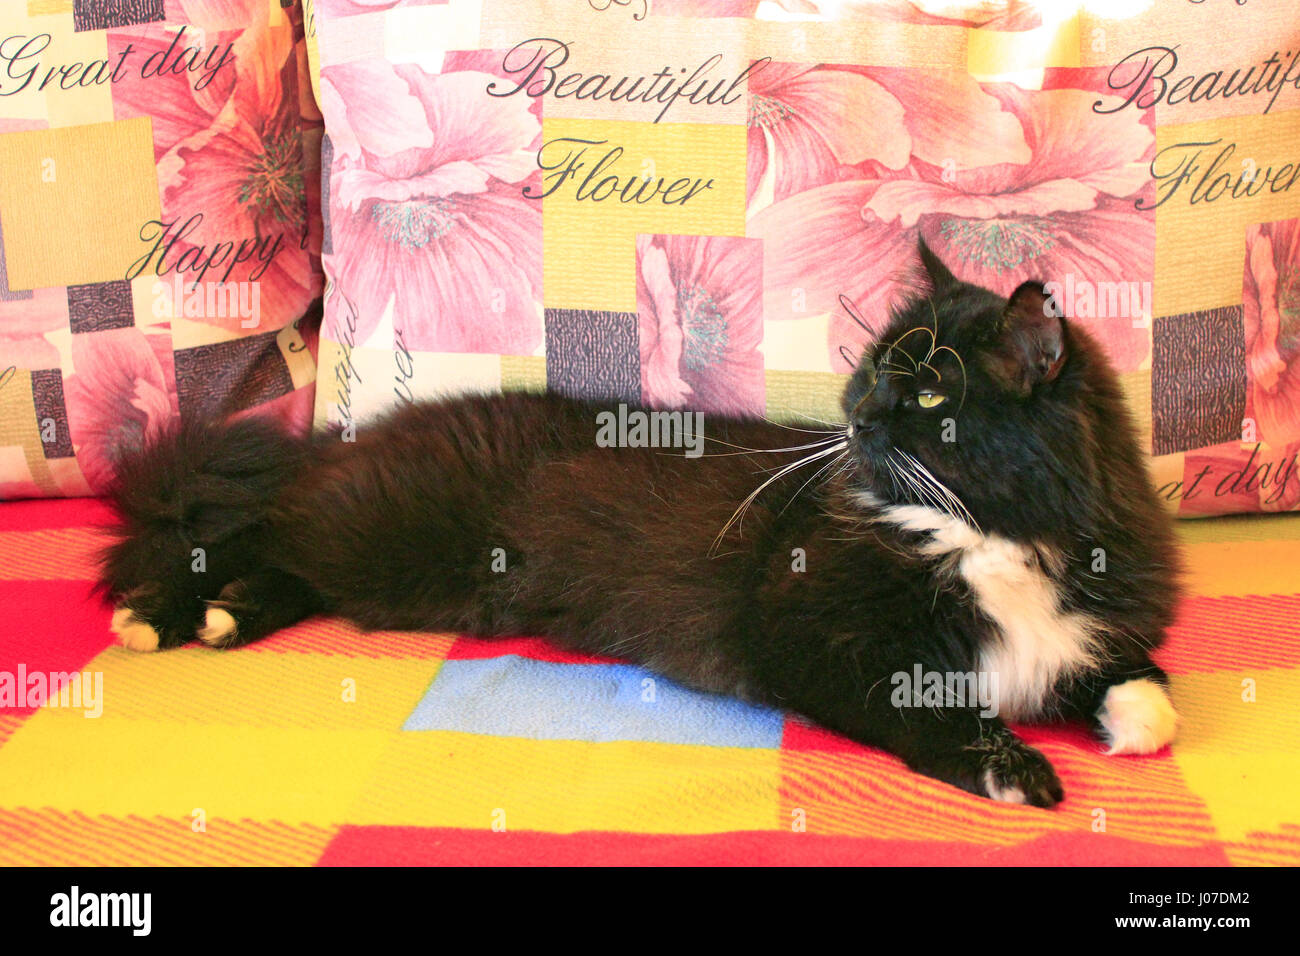 black cat sprawled on the colorful sofa Stock Photo